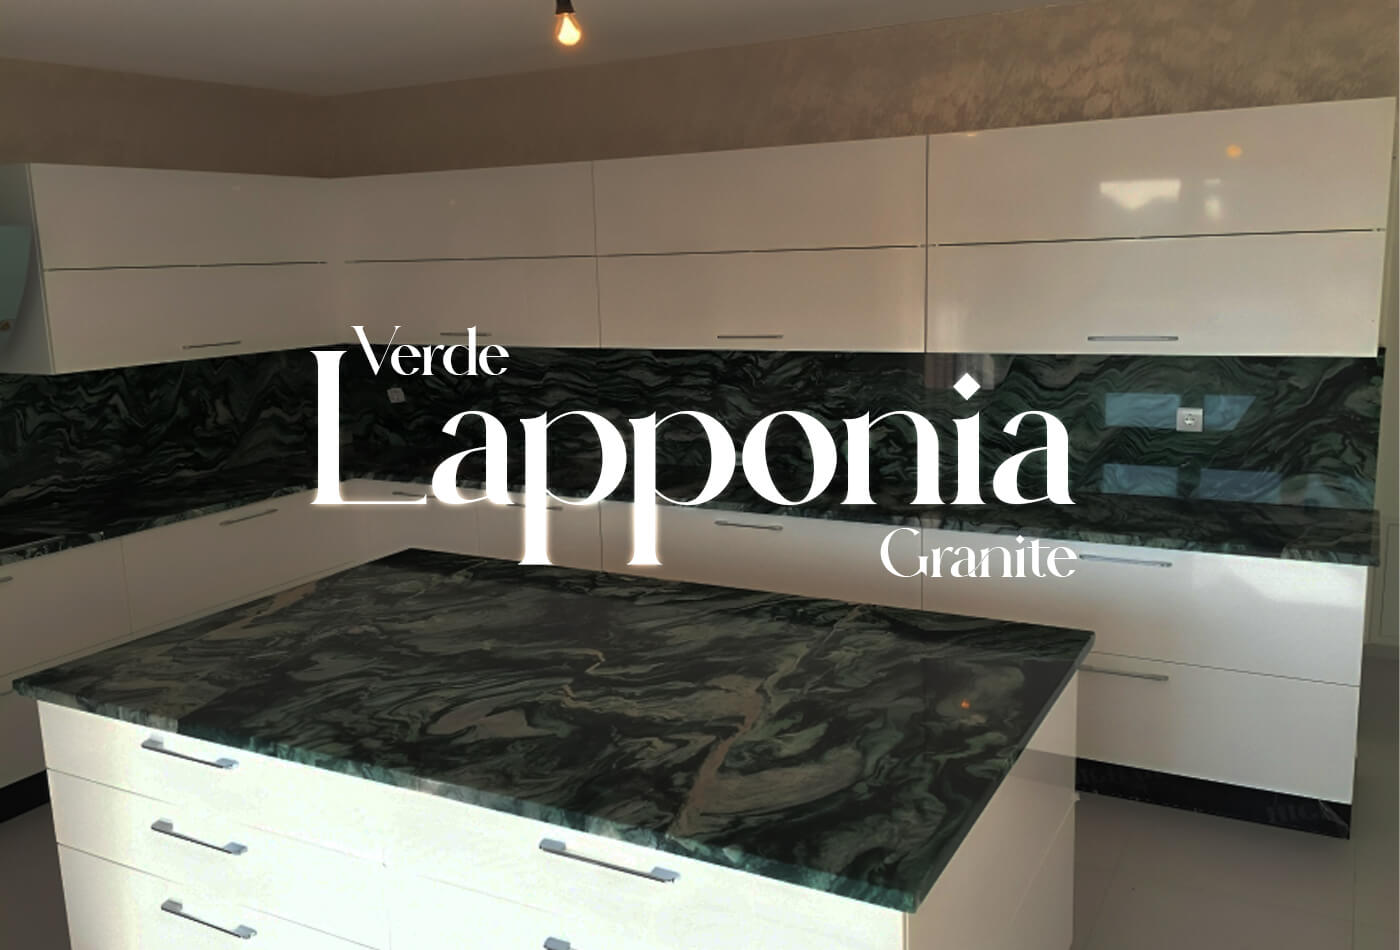 Explore Stunning Verde Lapponia Granite In Work-Tops!